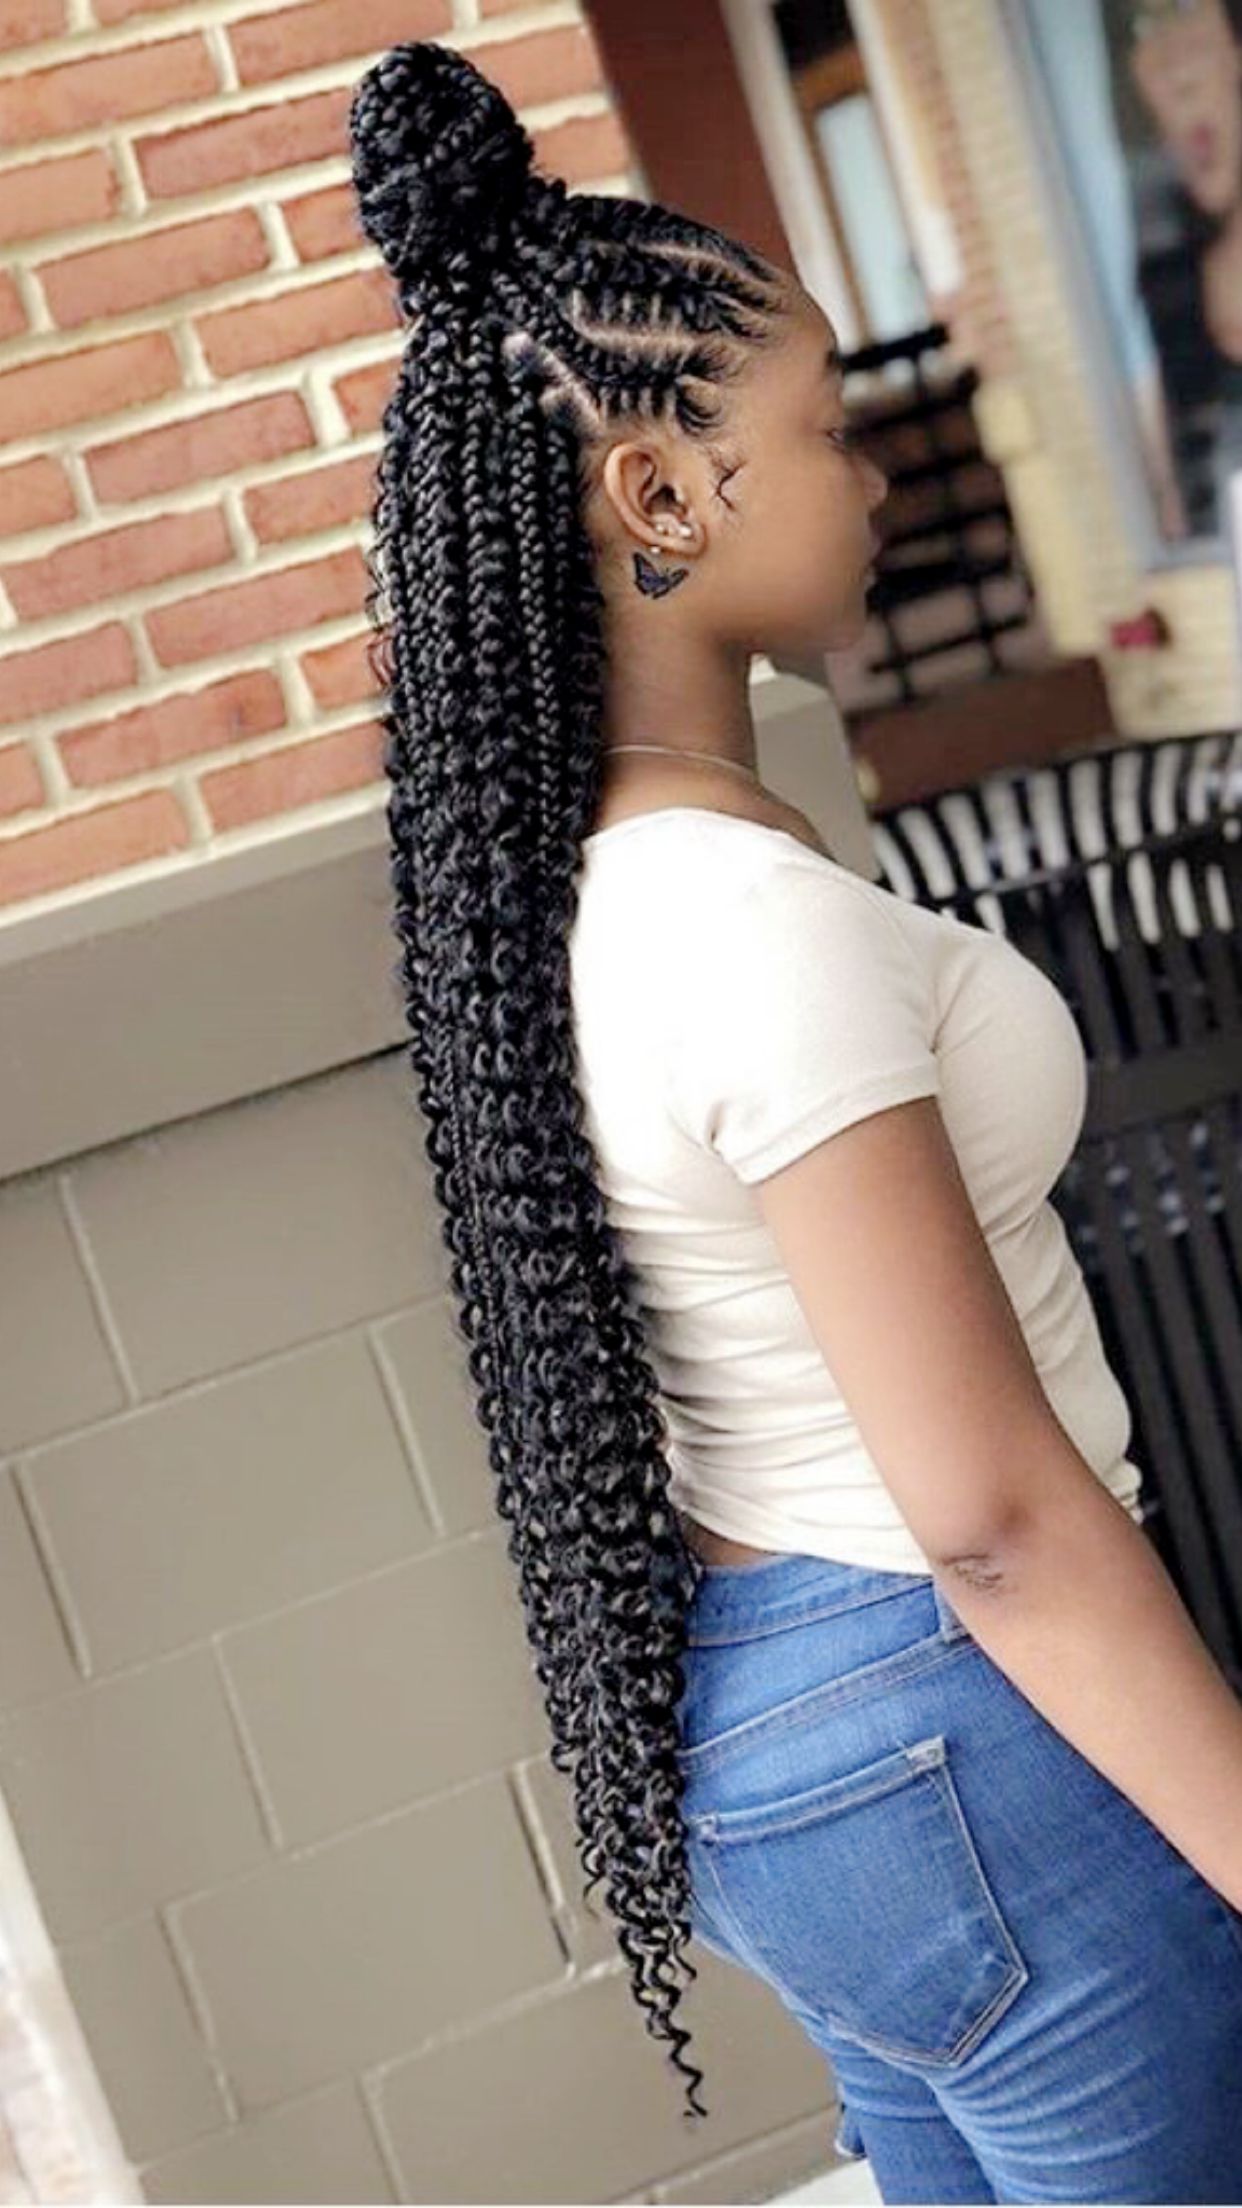 black girl hairstyles braids 2020 hairstyleforblackwomen.net 29